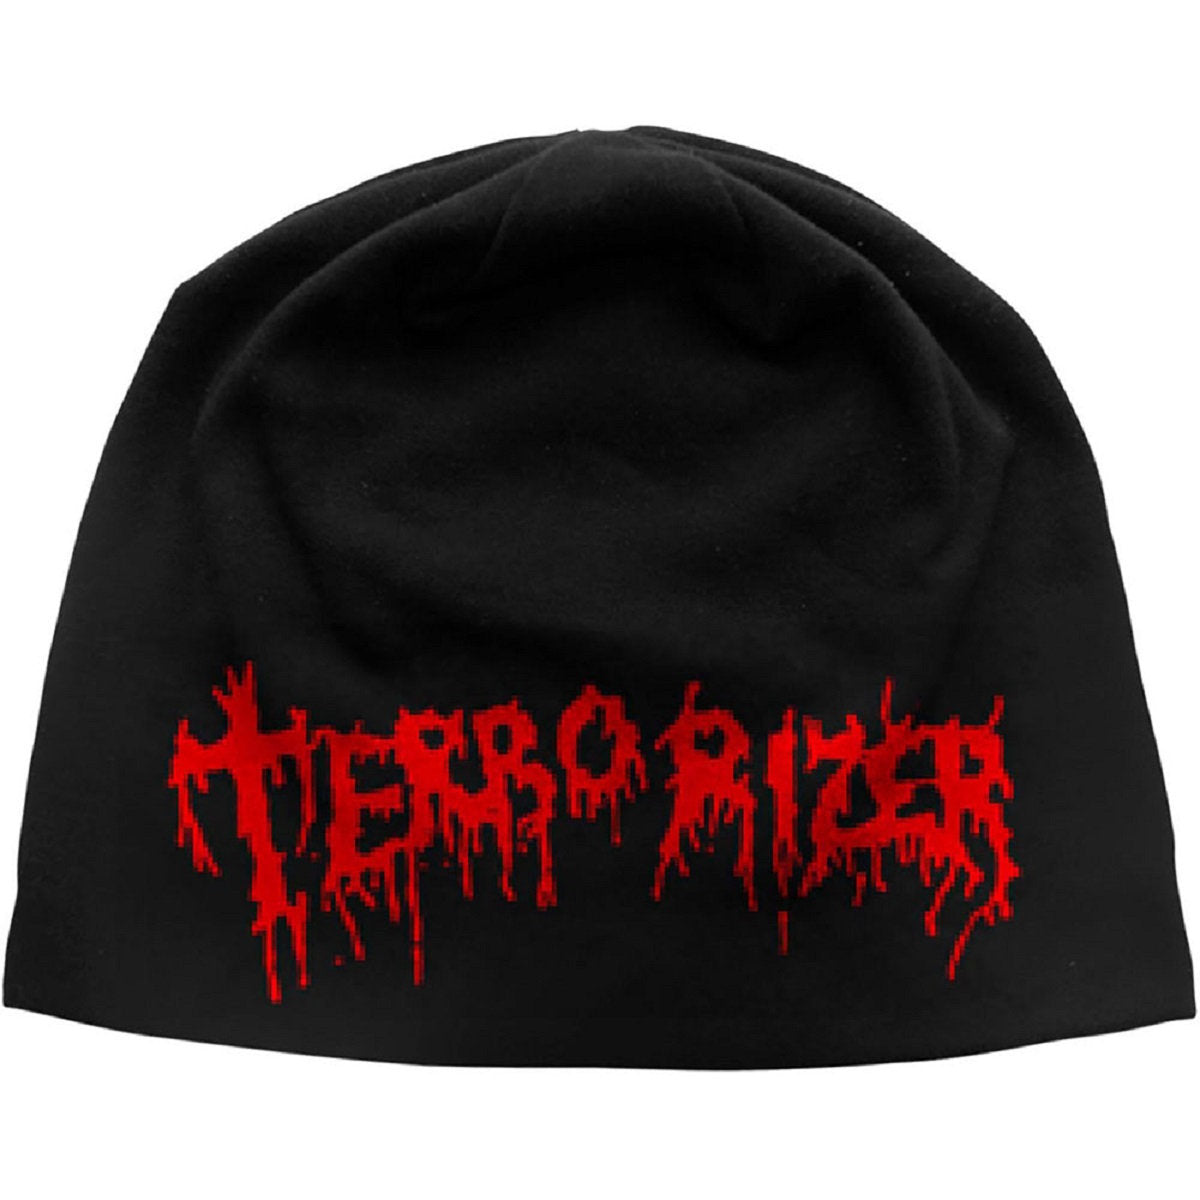 Terrorizer "Logo" Beanie